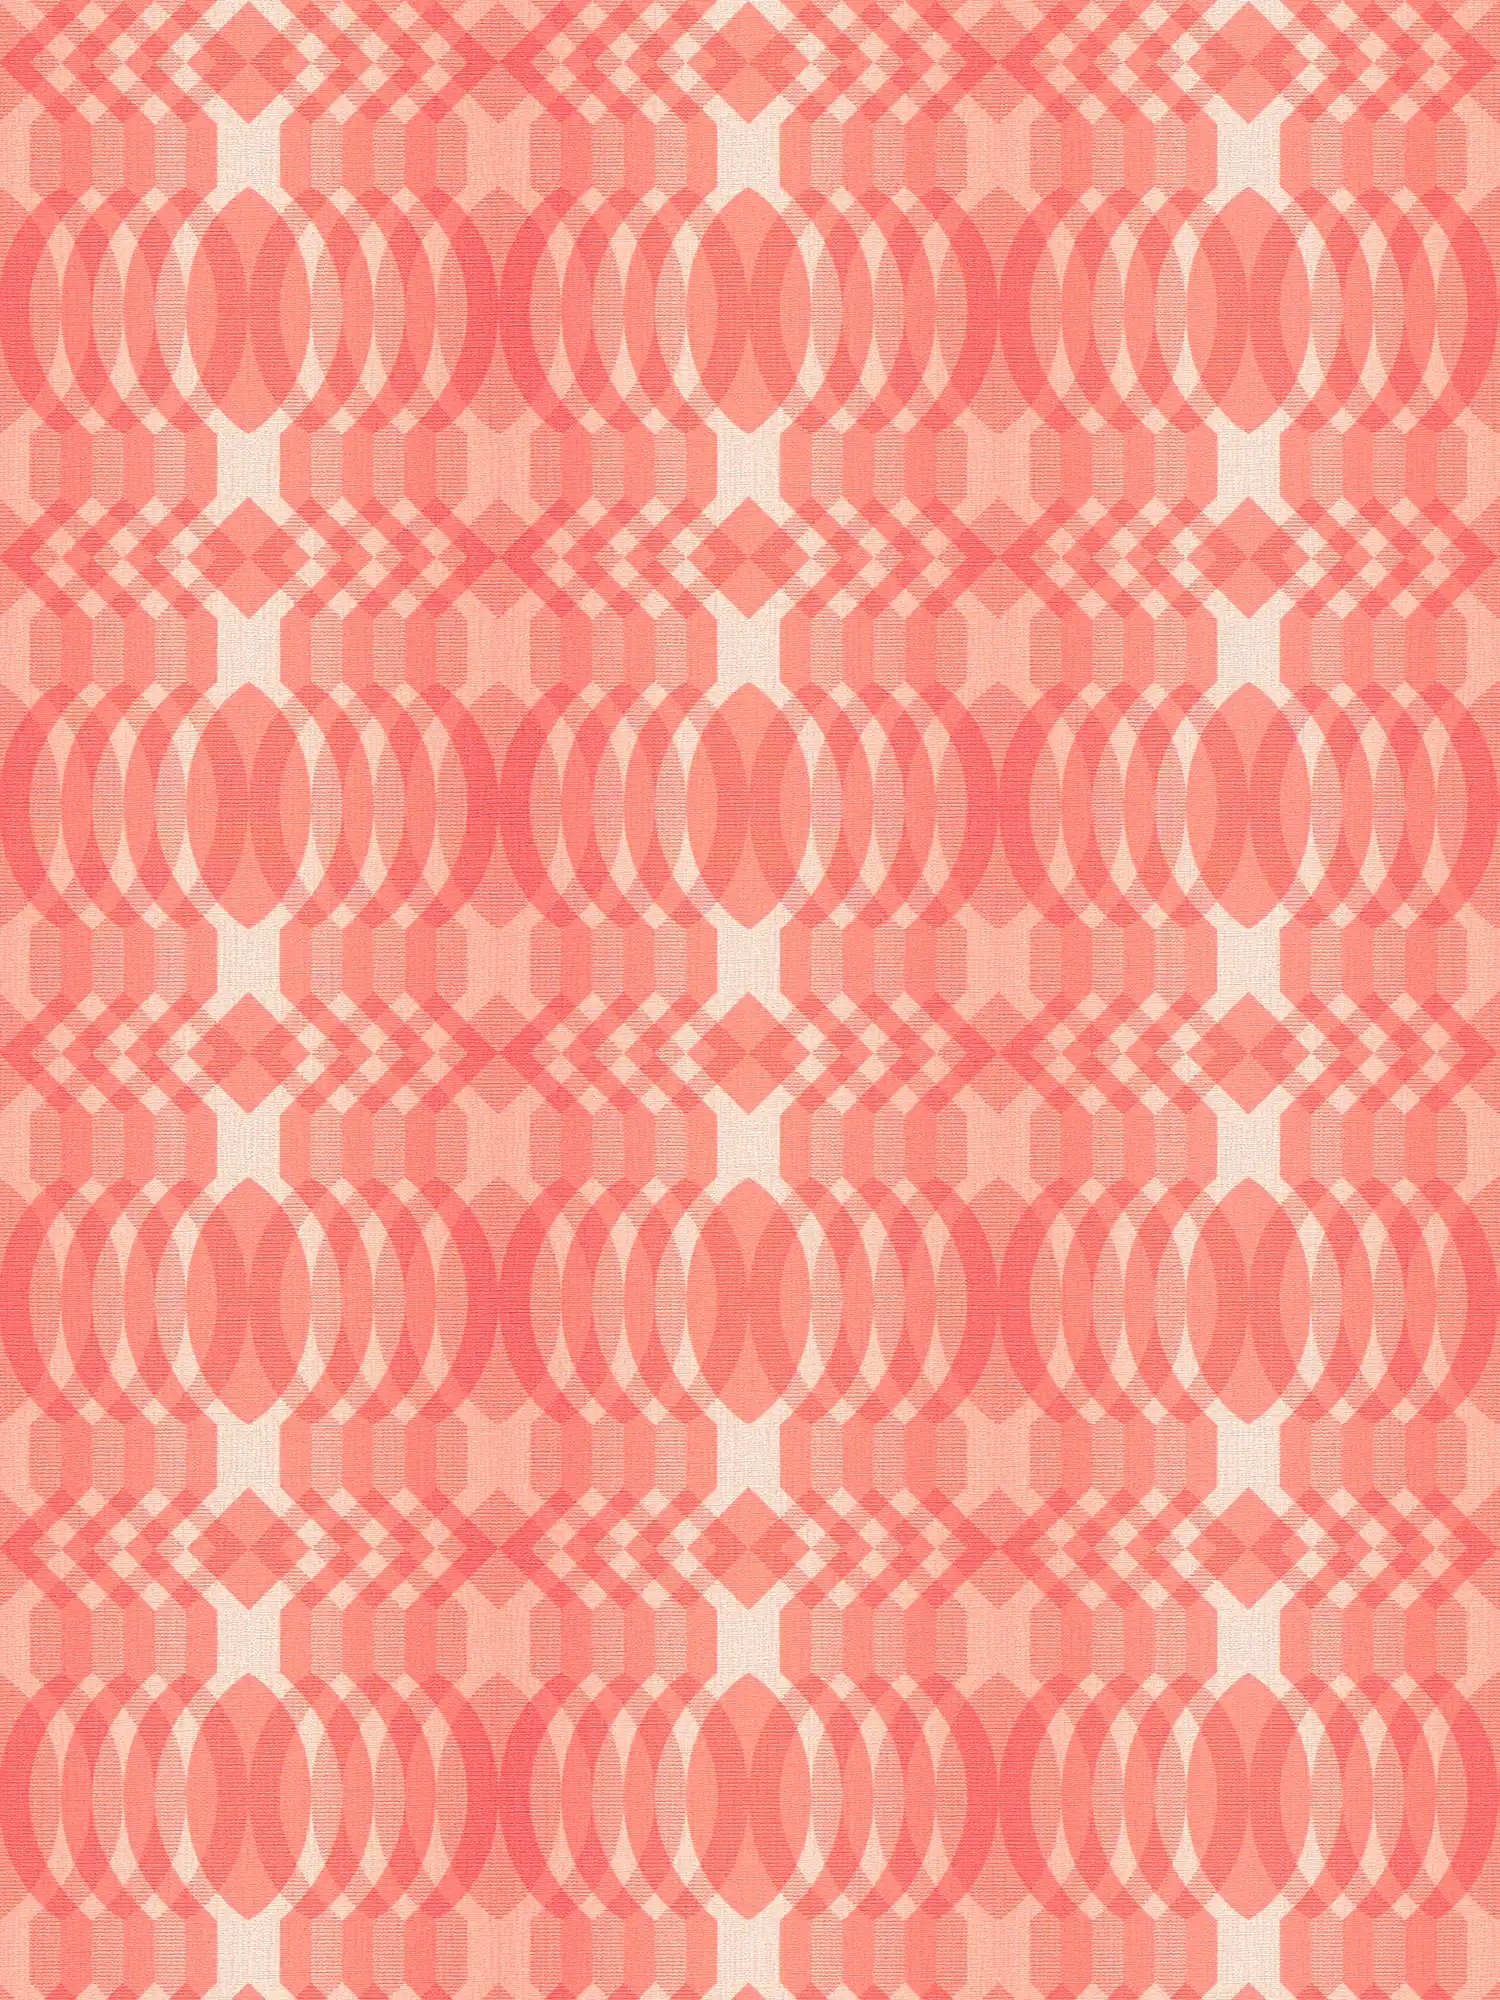 Motivo geométrico en papel pintado no tejido de estilo retro - rojo, crema, blanco
